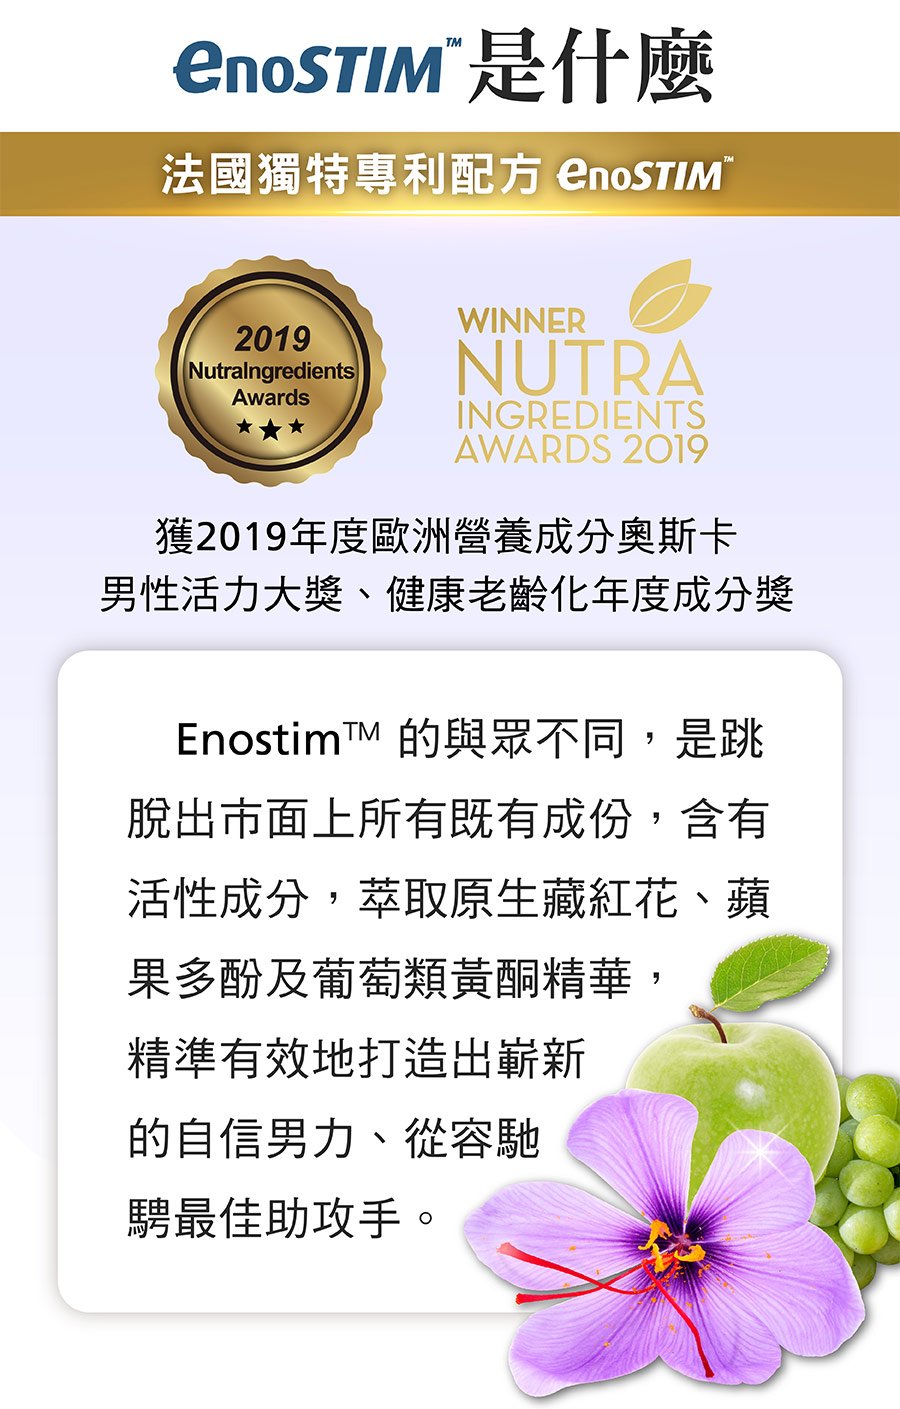 EnoSTIM™ 是一種獨特的專利配方，含有活性成分、蘋果和葡萄多酚，富含藏紅花。 經科學證明，EnoSTIM™ 是食品補充劑的完美天然男性增強劑成分。